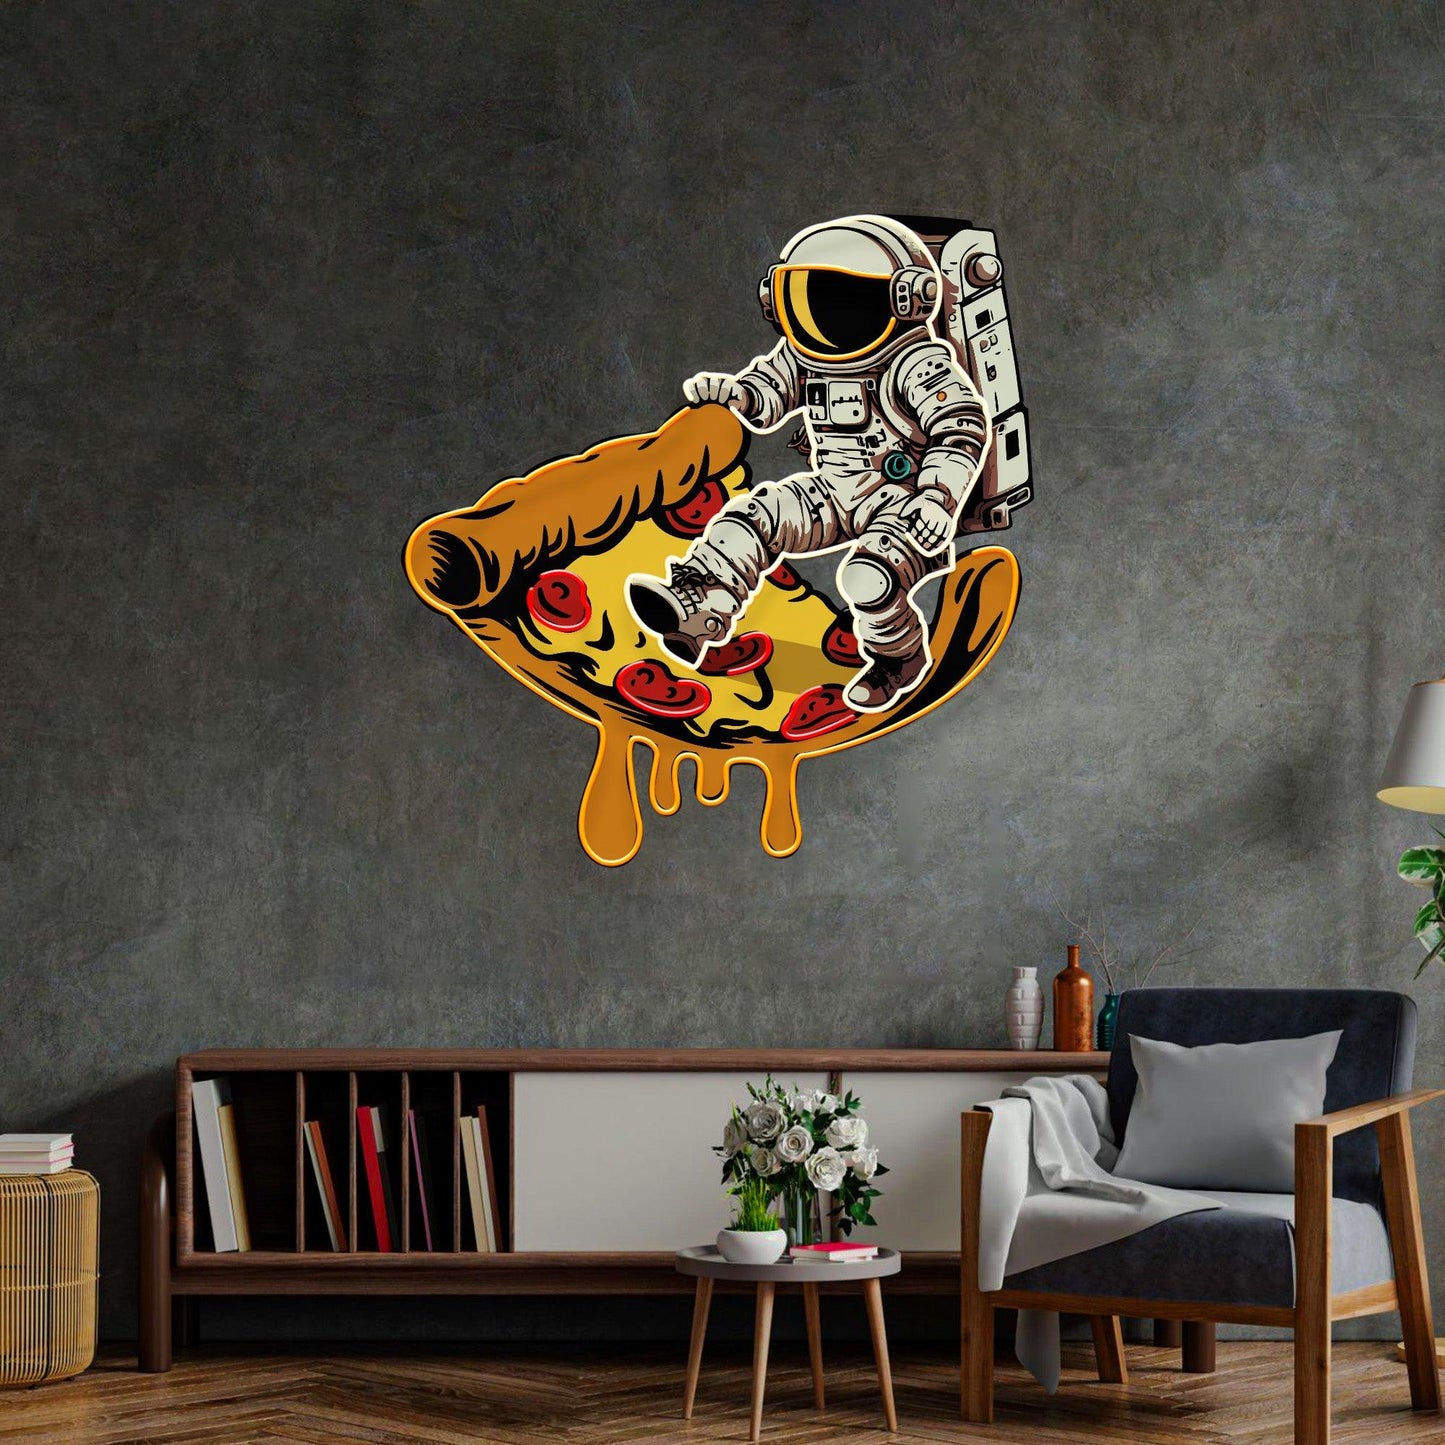 Astronaut on Pizza Mat Led Neon Acrylic Artwork - Neonzastudio